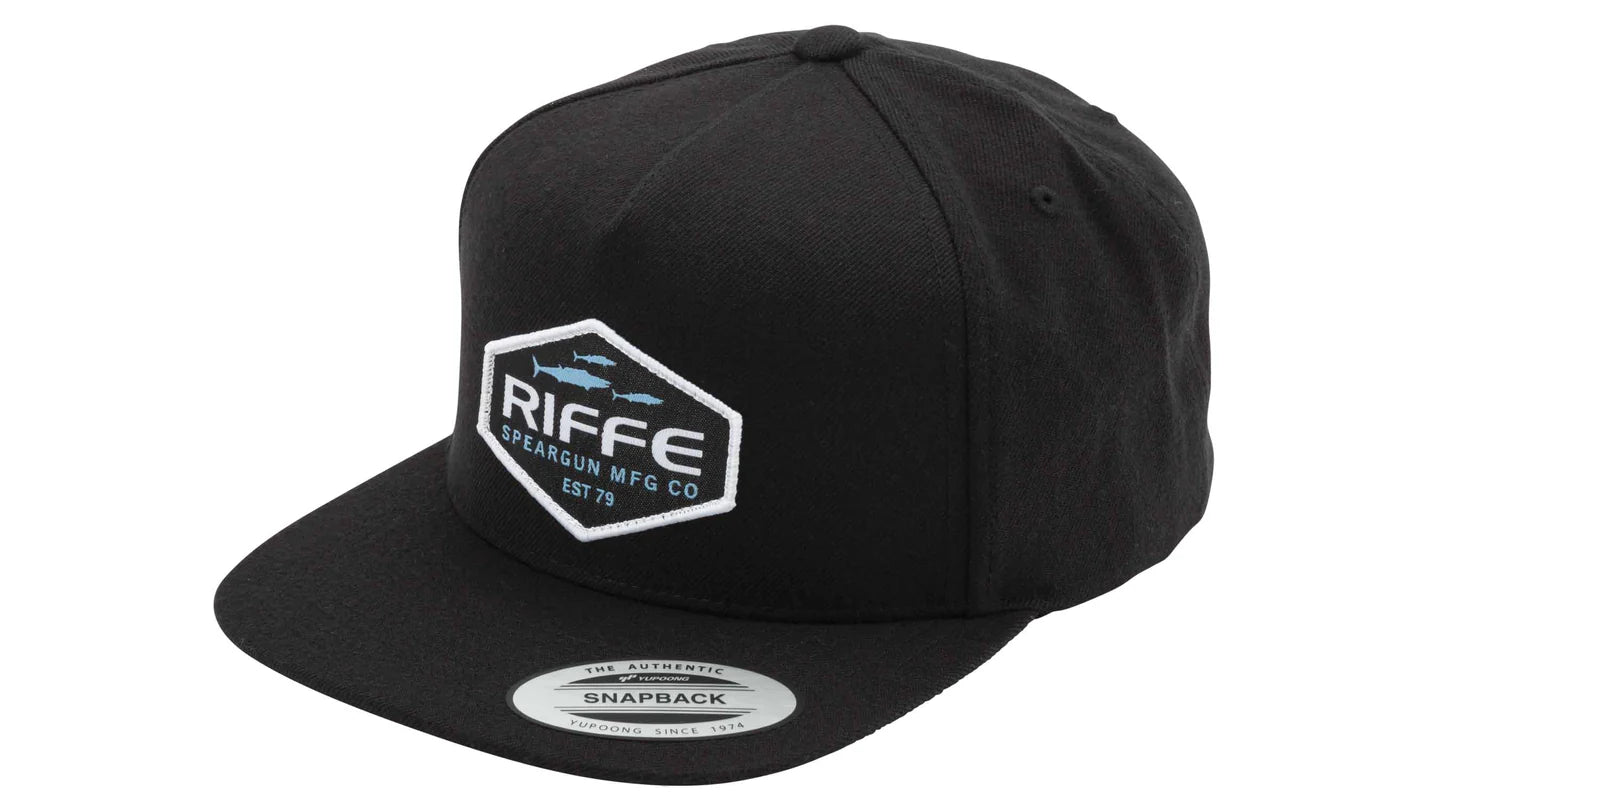 Riffe Wahoo Hat